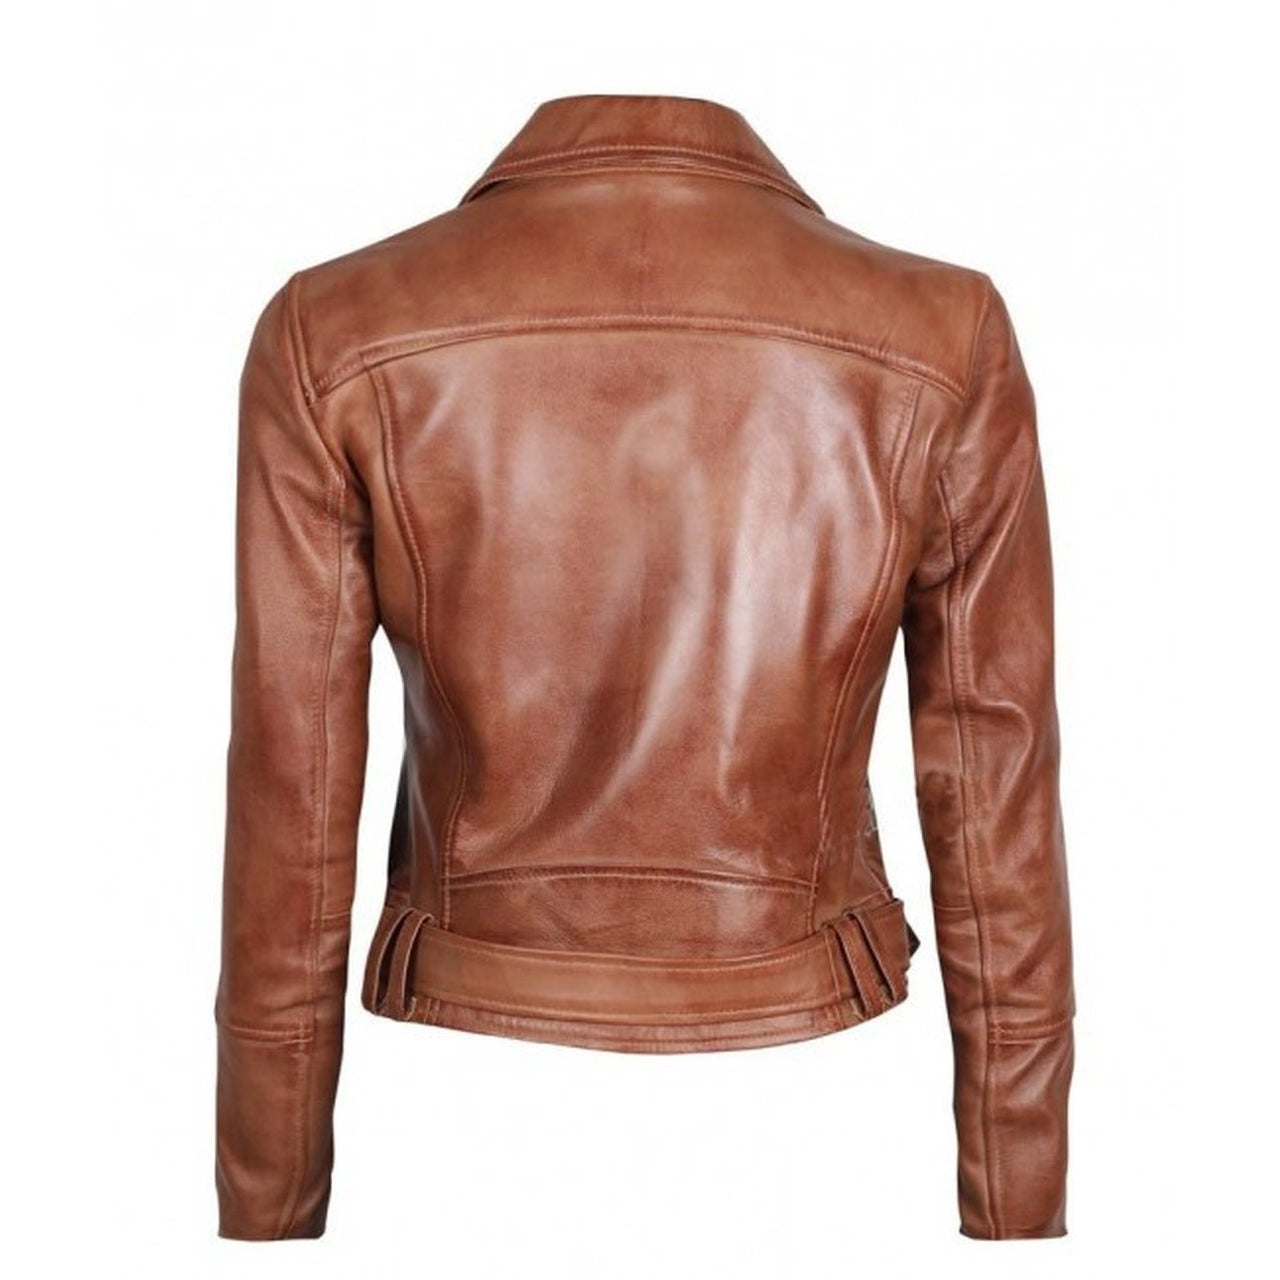 Light Brown Leather Jacket Women - Leather Jacket